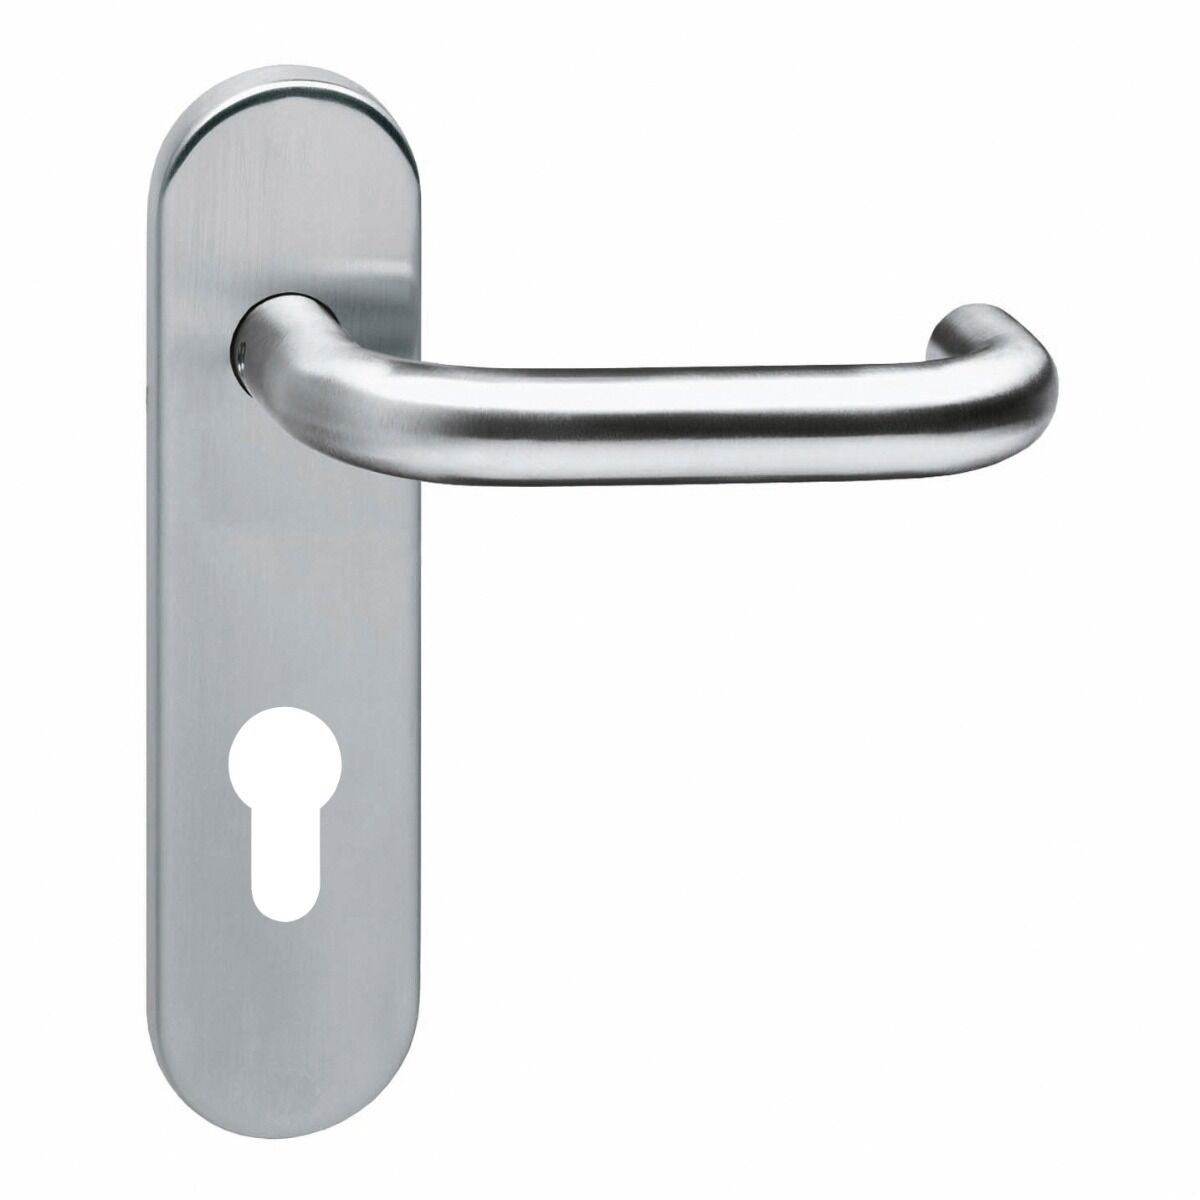 Intersteel Security fittings, round door handle, on shield, stainless steel